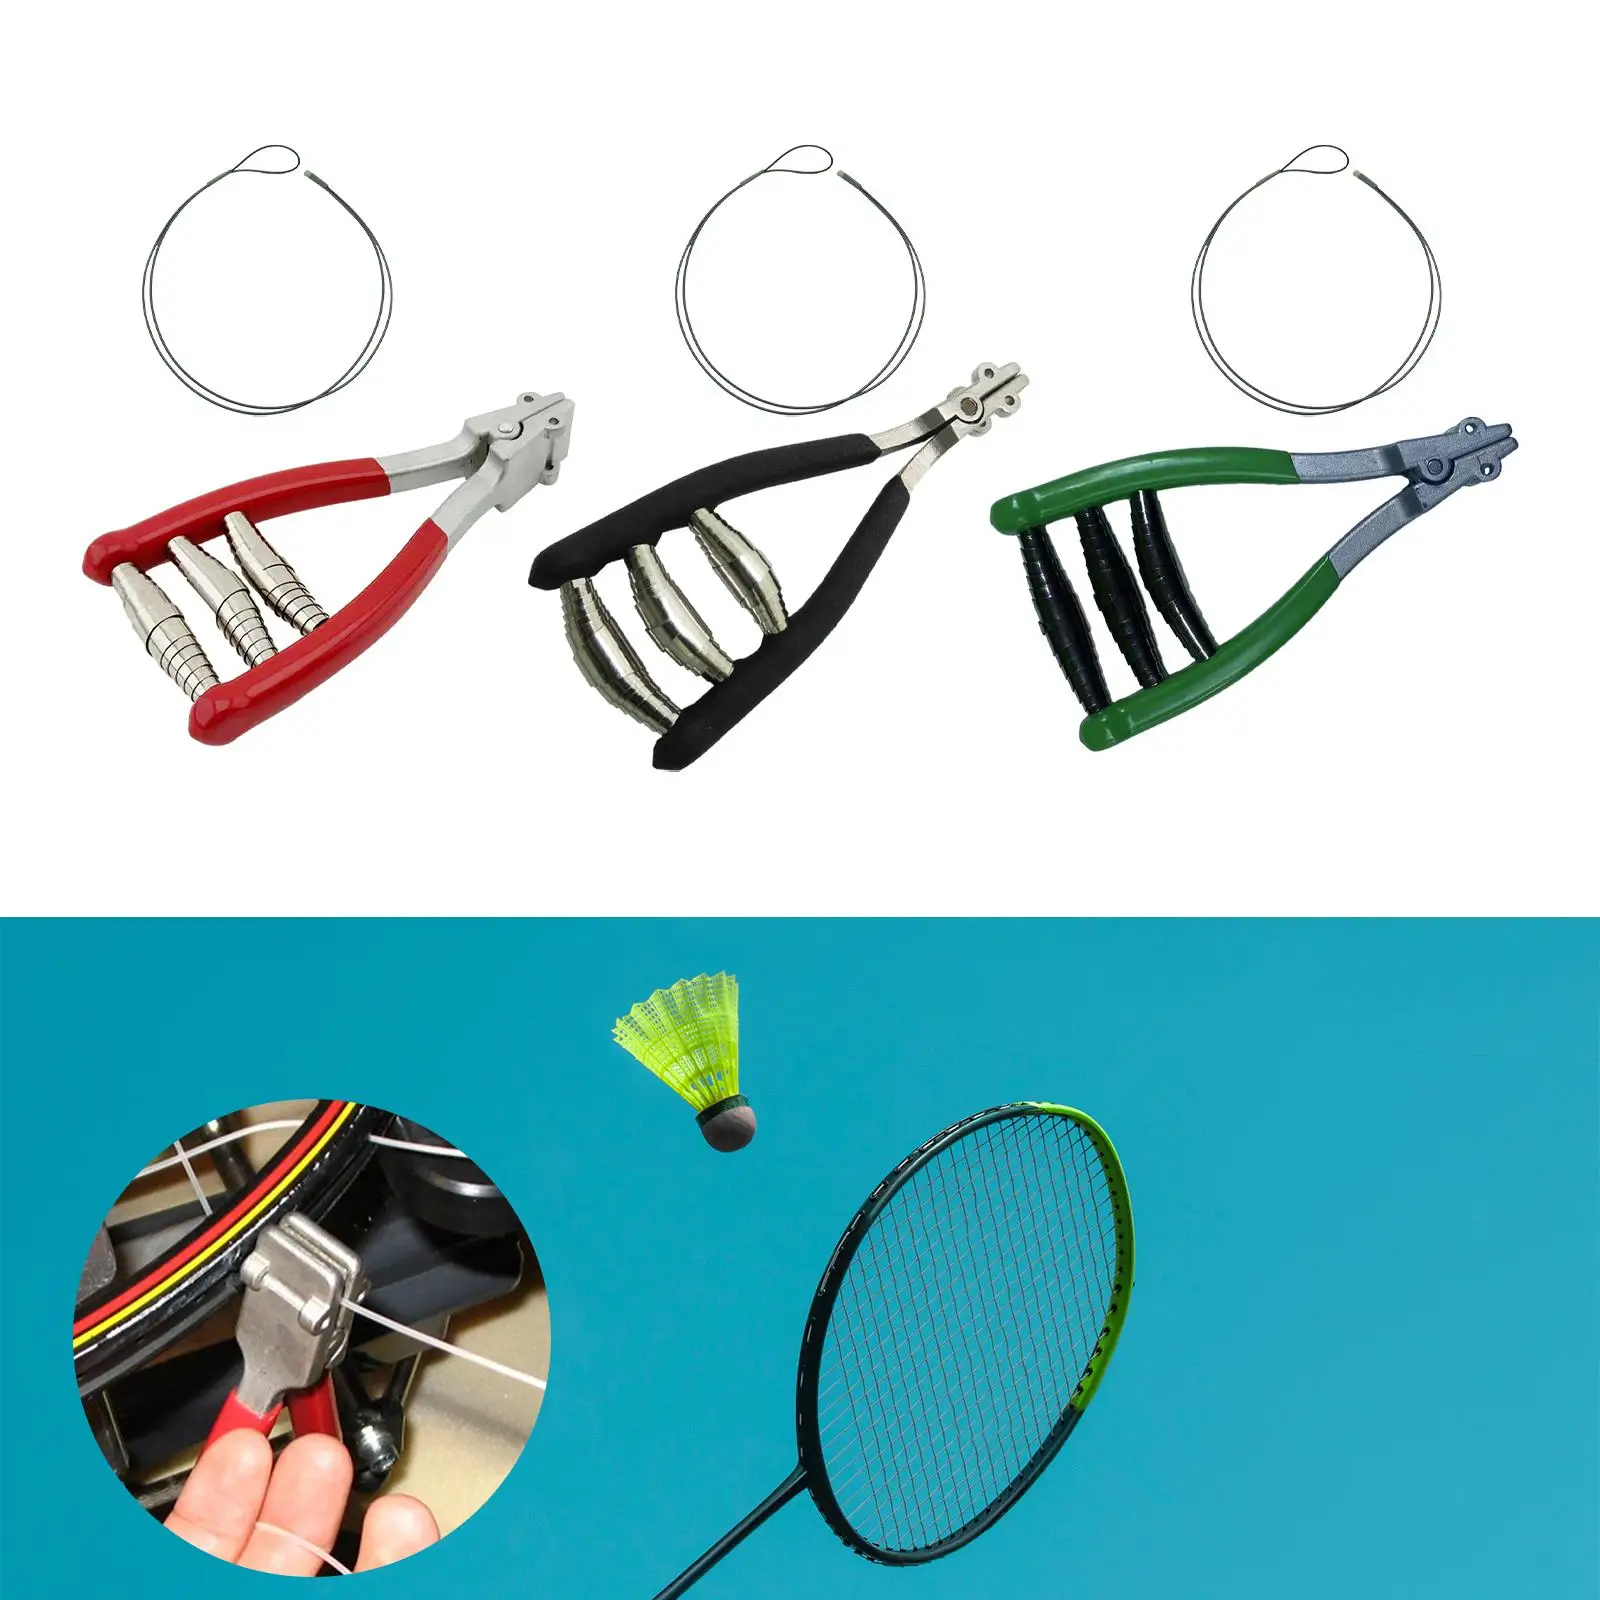 Starting Clamp Clamping Tool Badminton Stringing Clamp Wide Head Manual Sports Tennis Equipment for Badminton Tennis Squash